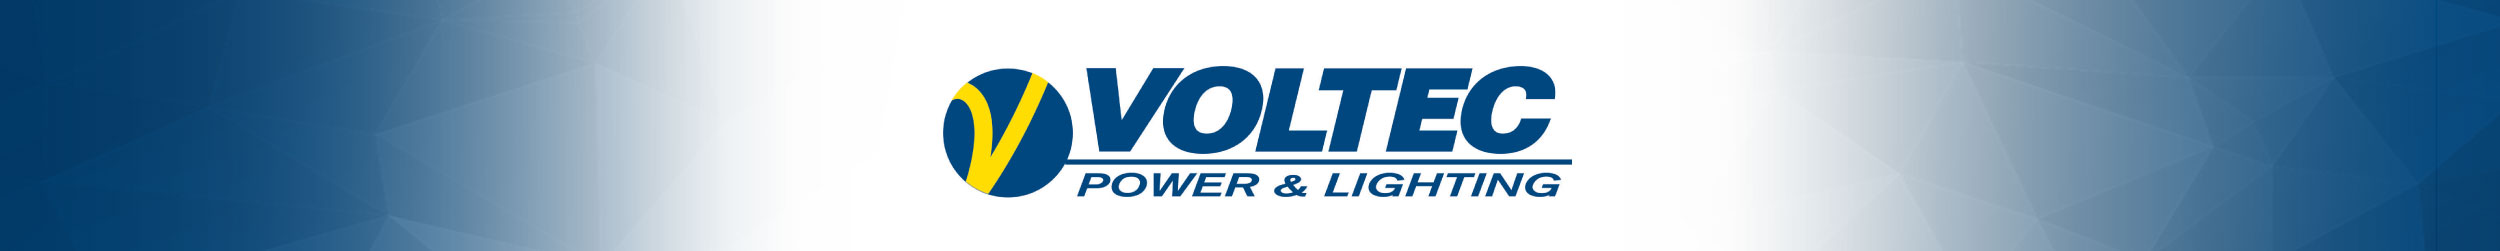 Voltec Power & Lighting | WRYKER Construction Supply